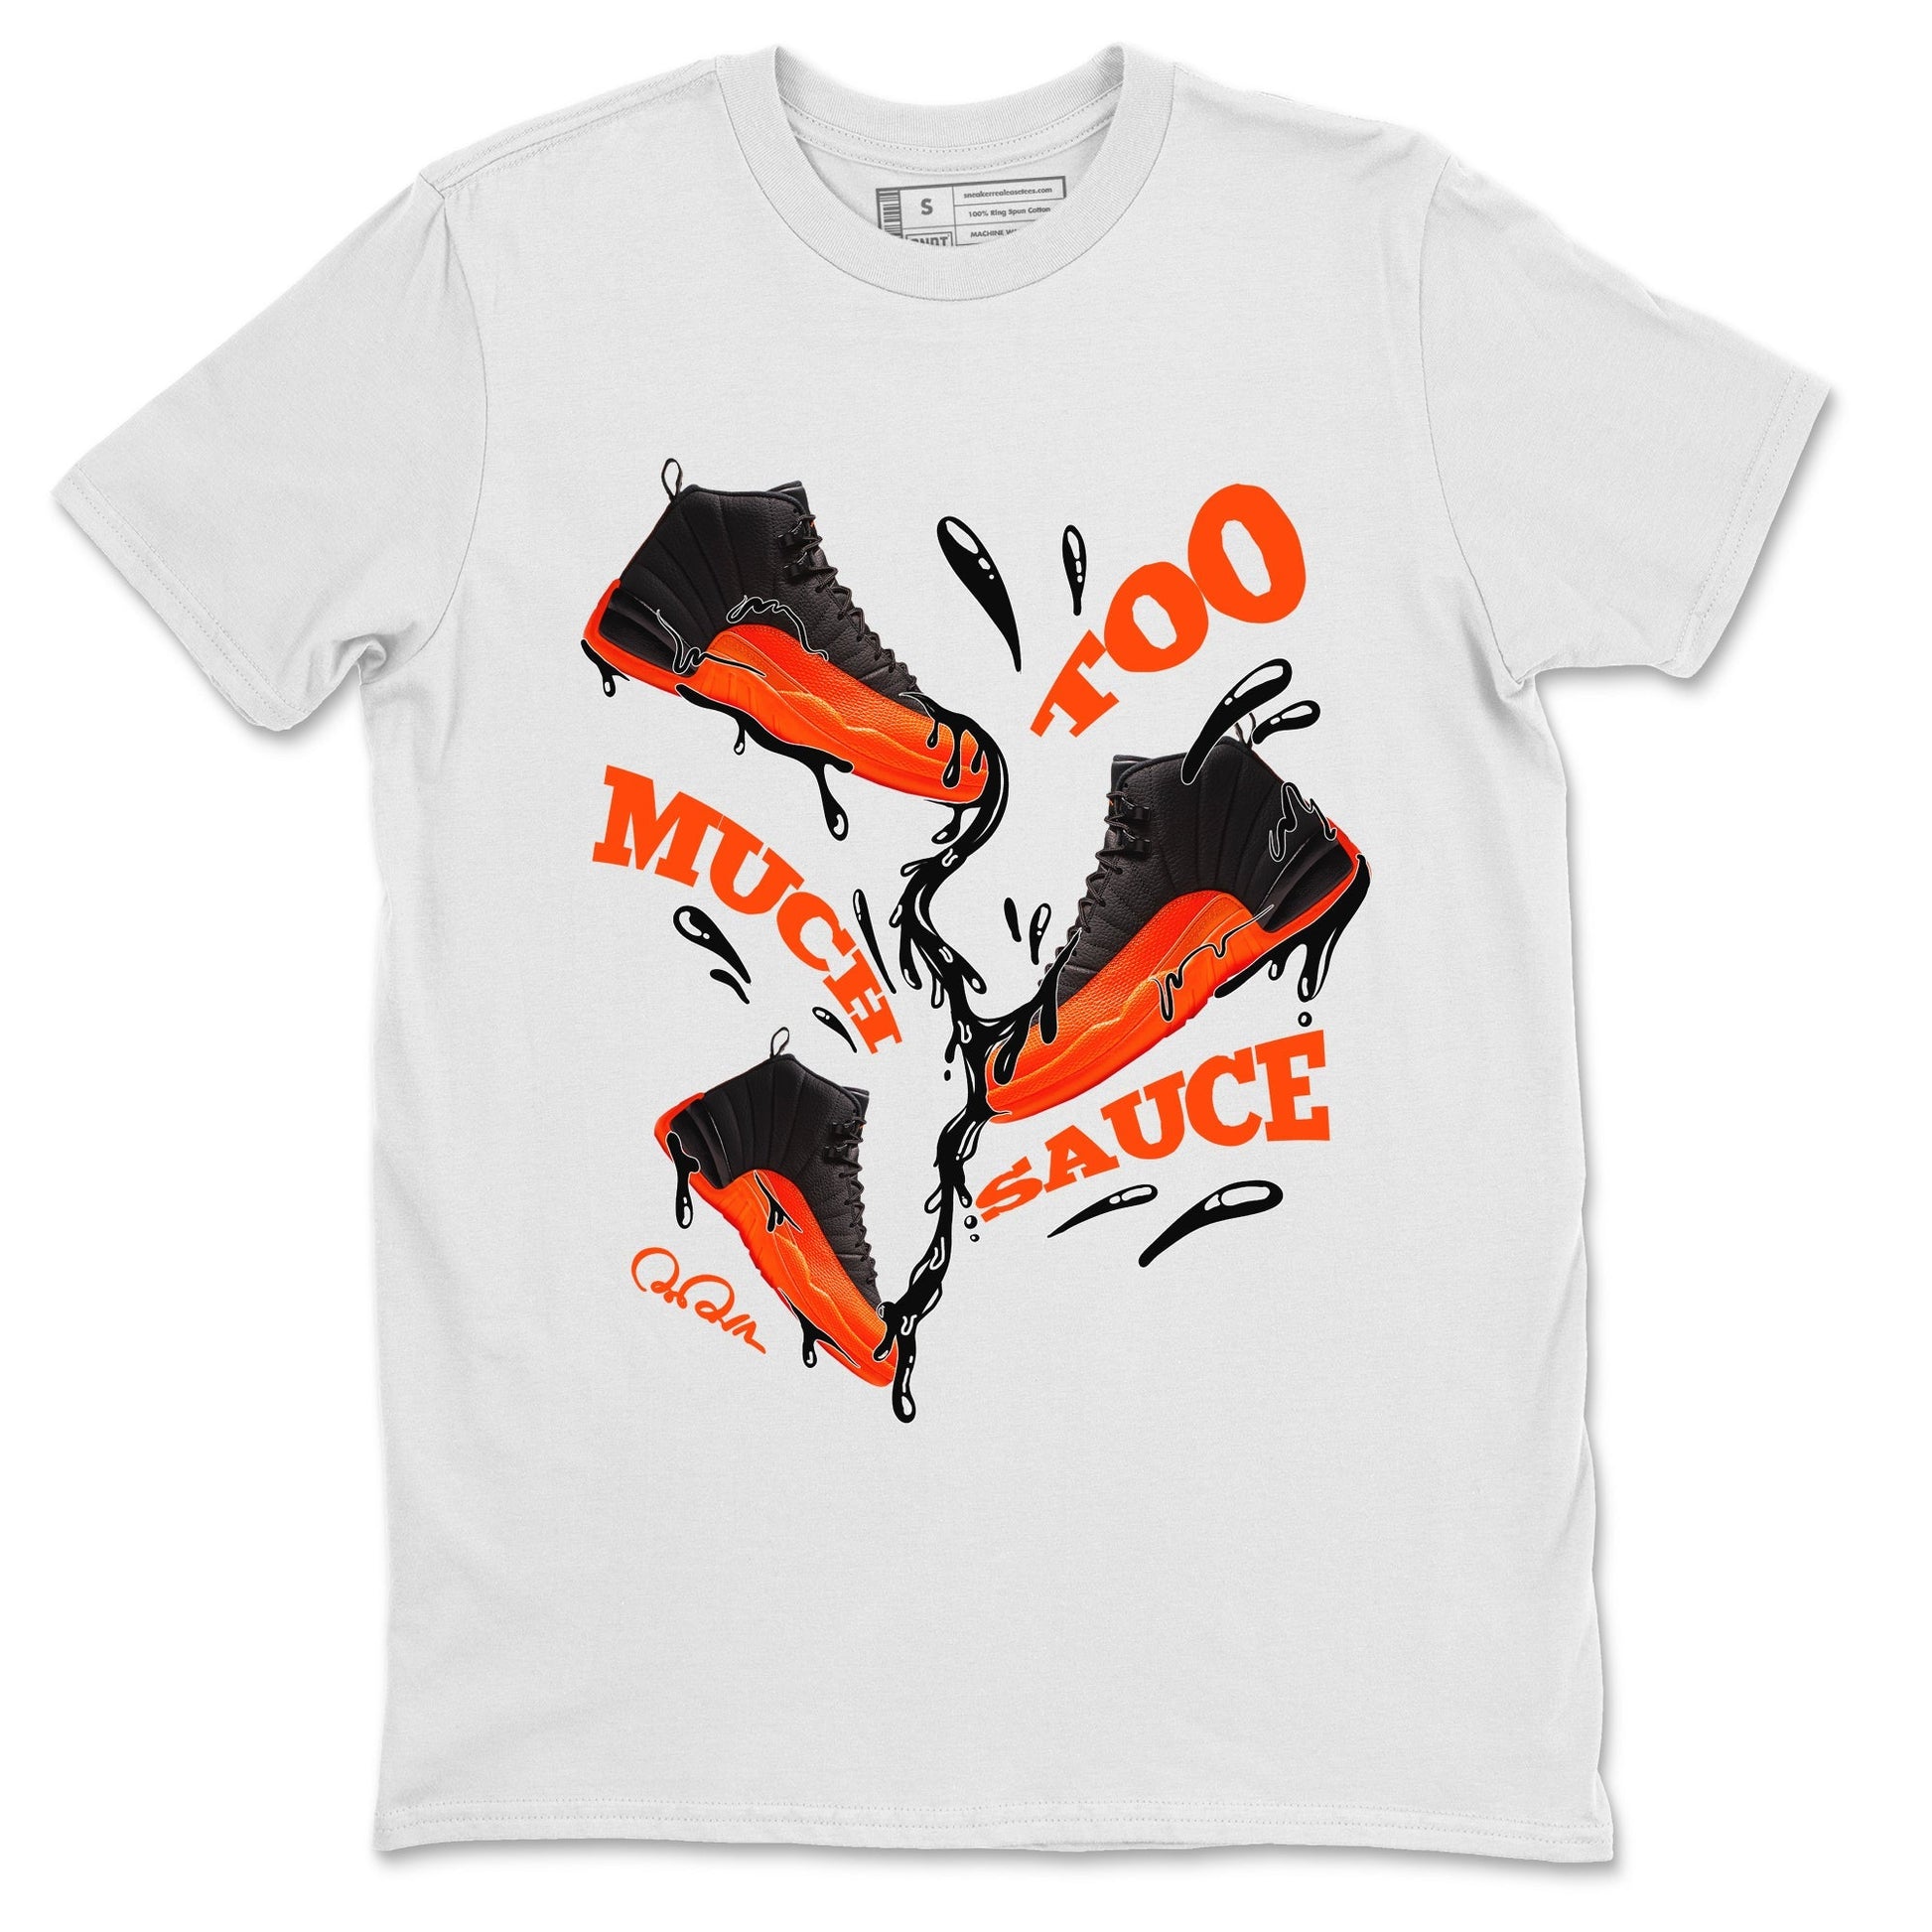 Air Jordan 12 Brilliant Orange Sneaker Match Tees Too Much Sauce Sneaker Tees AJ12 Brilliant Orange Sneaker Release Tees Unisex Shirts White 2